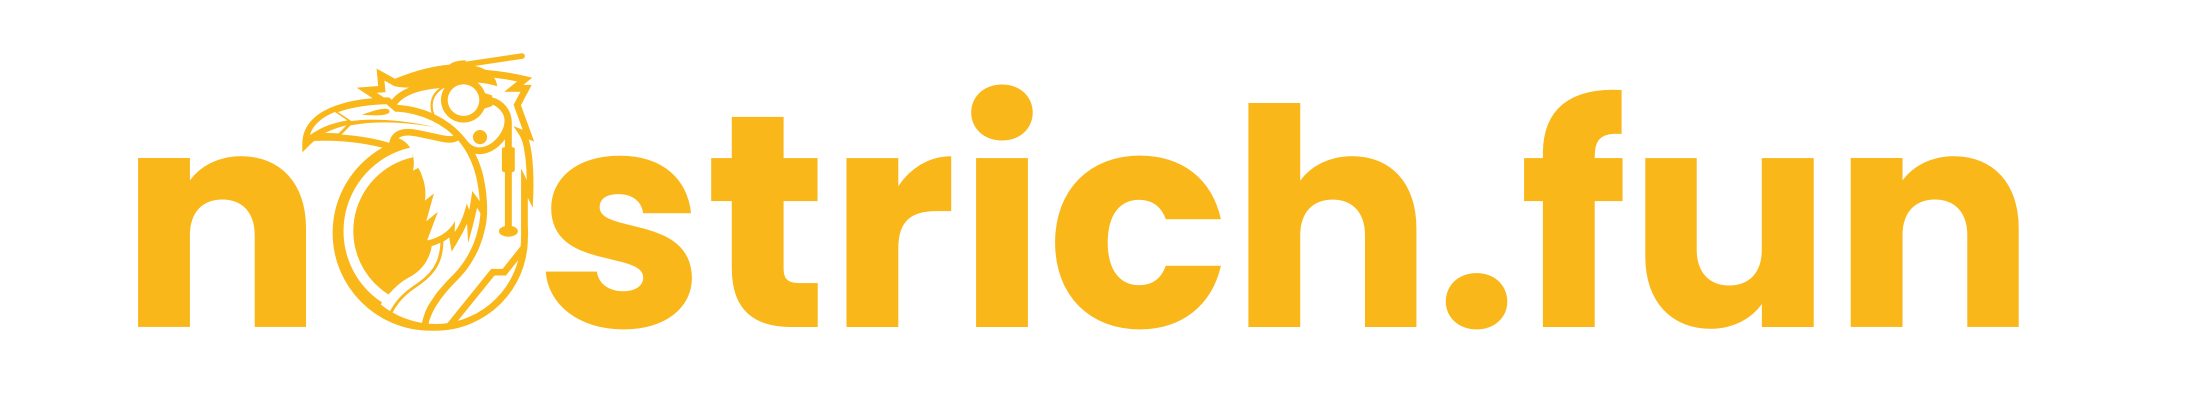 Nostrich.fun logo